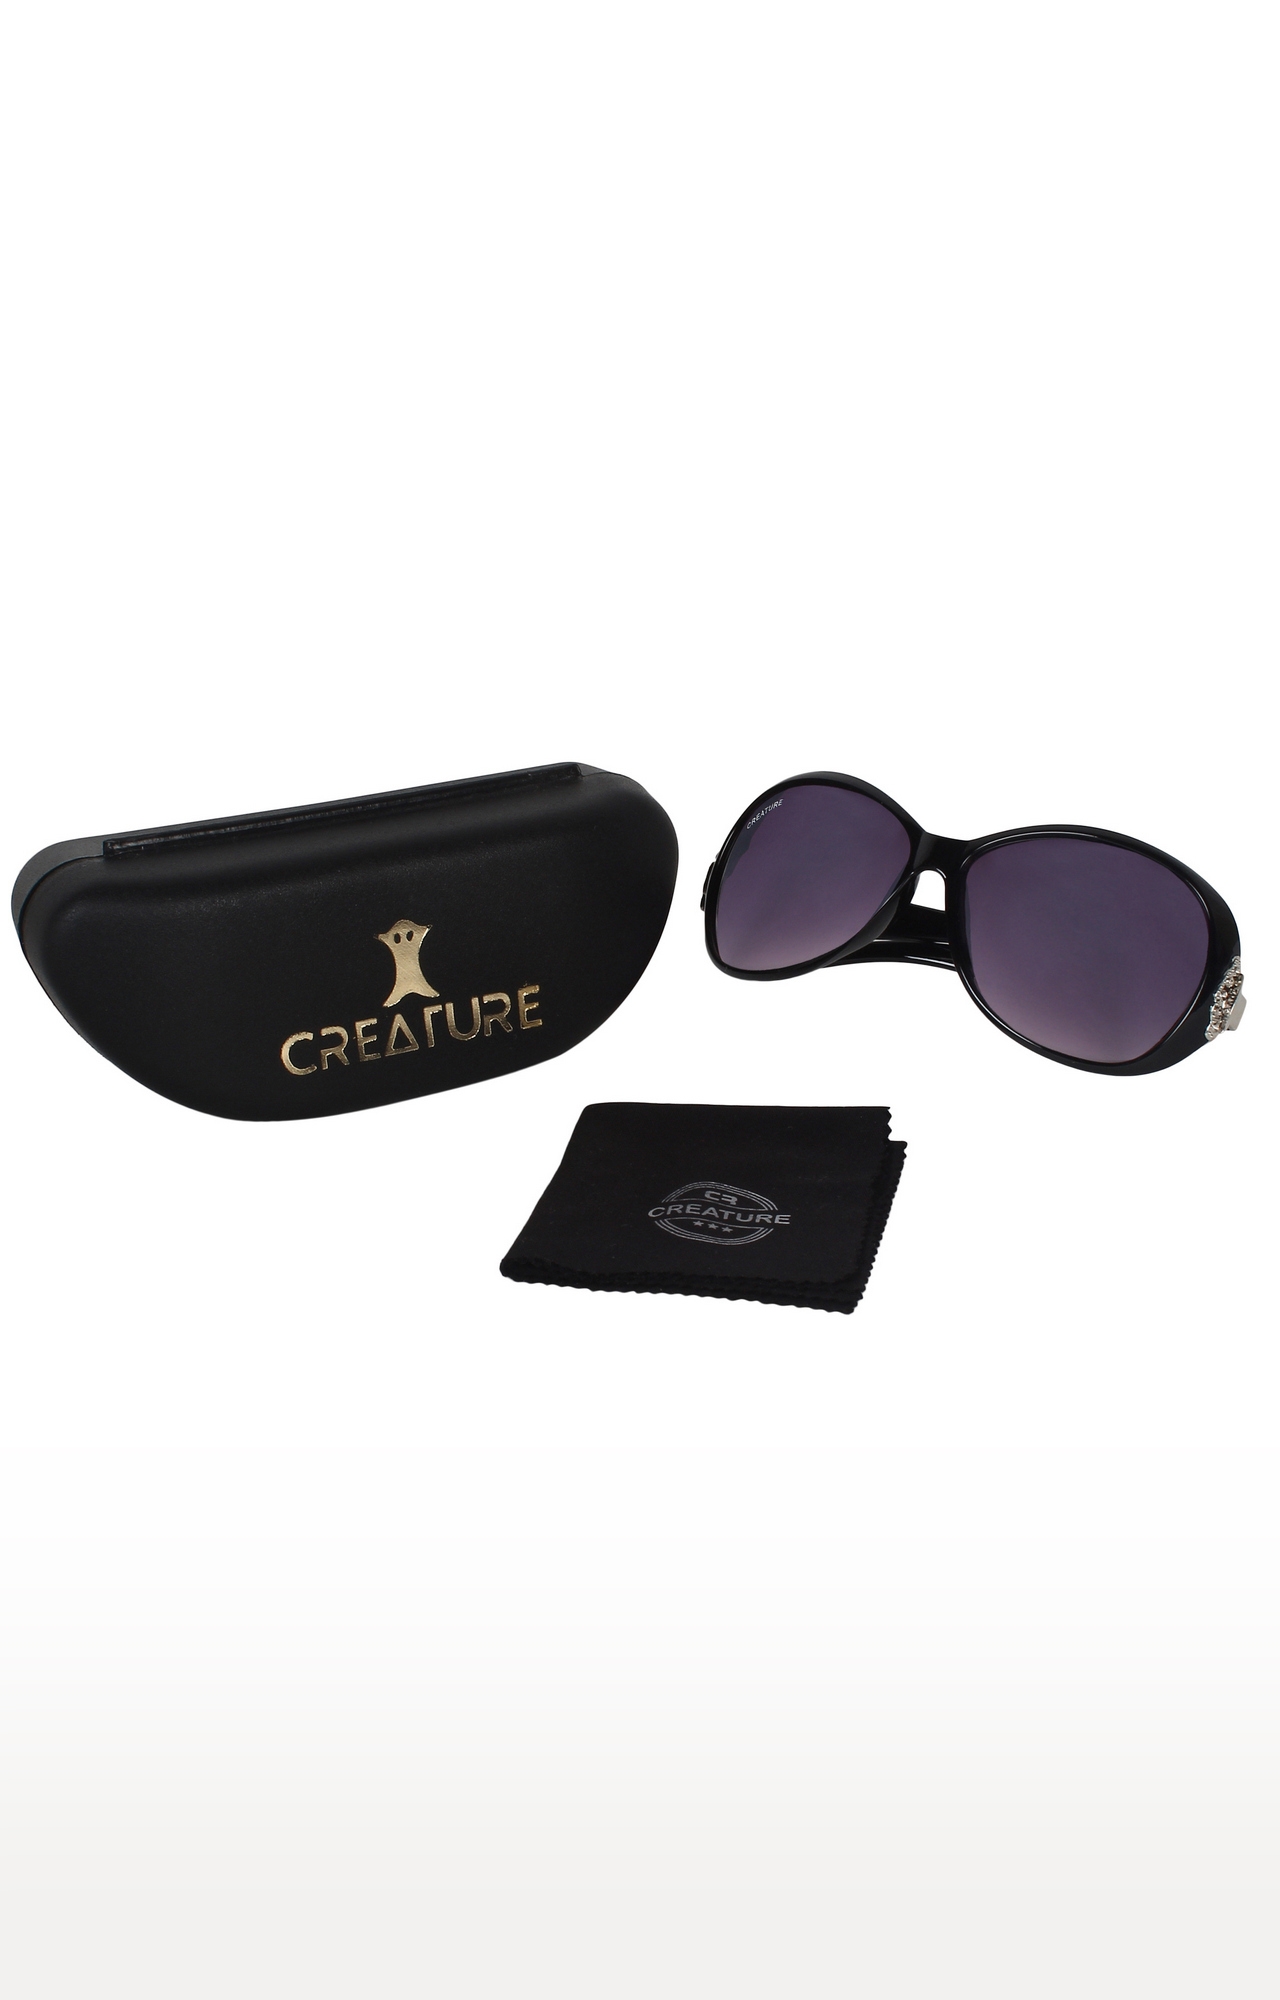 CREATURE | CREATURE Gaga Oversized Sunglasses For Women (Lens-Purple|Frame-Black) 5